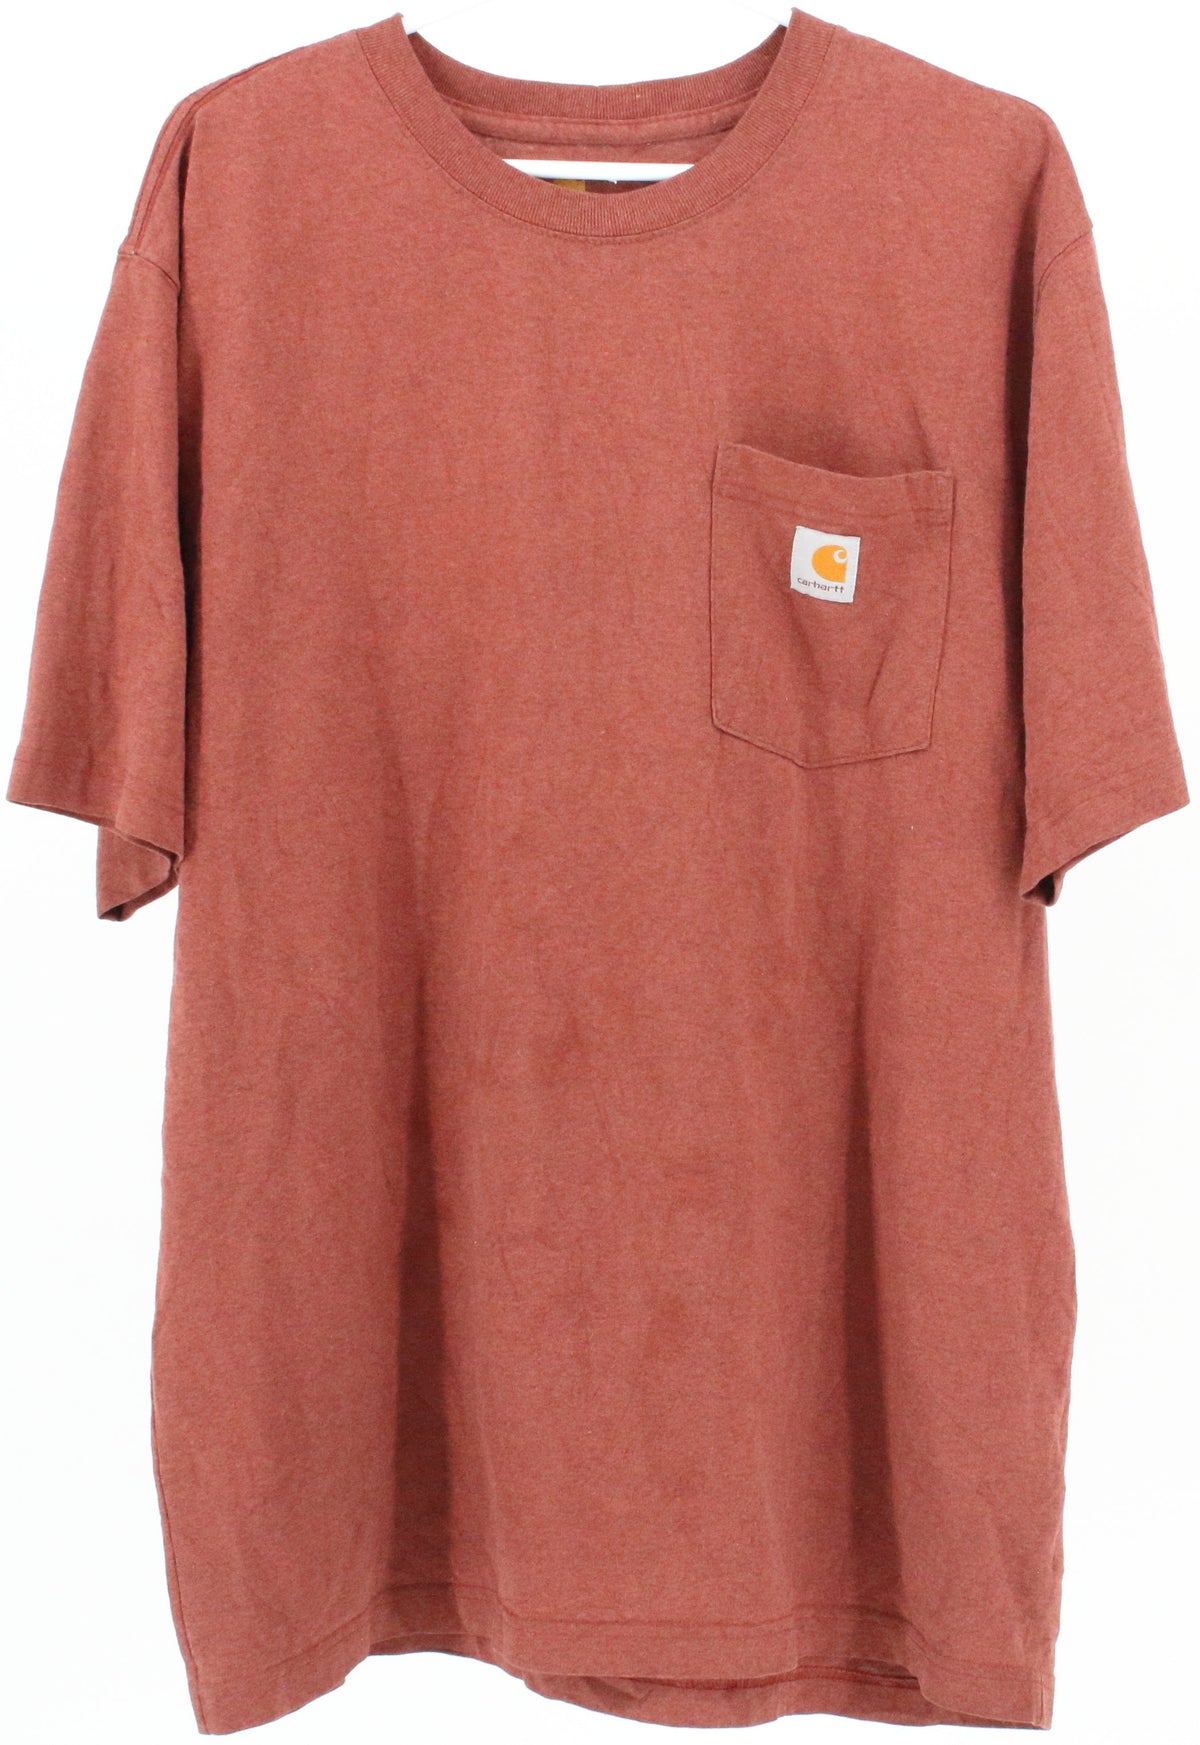 Carhartt Original Fit Terracotta Front Pocket T-Shirt